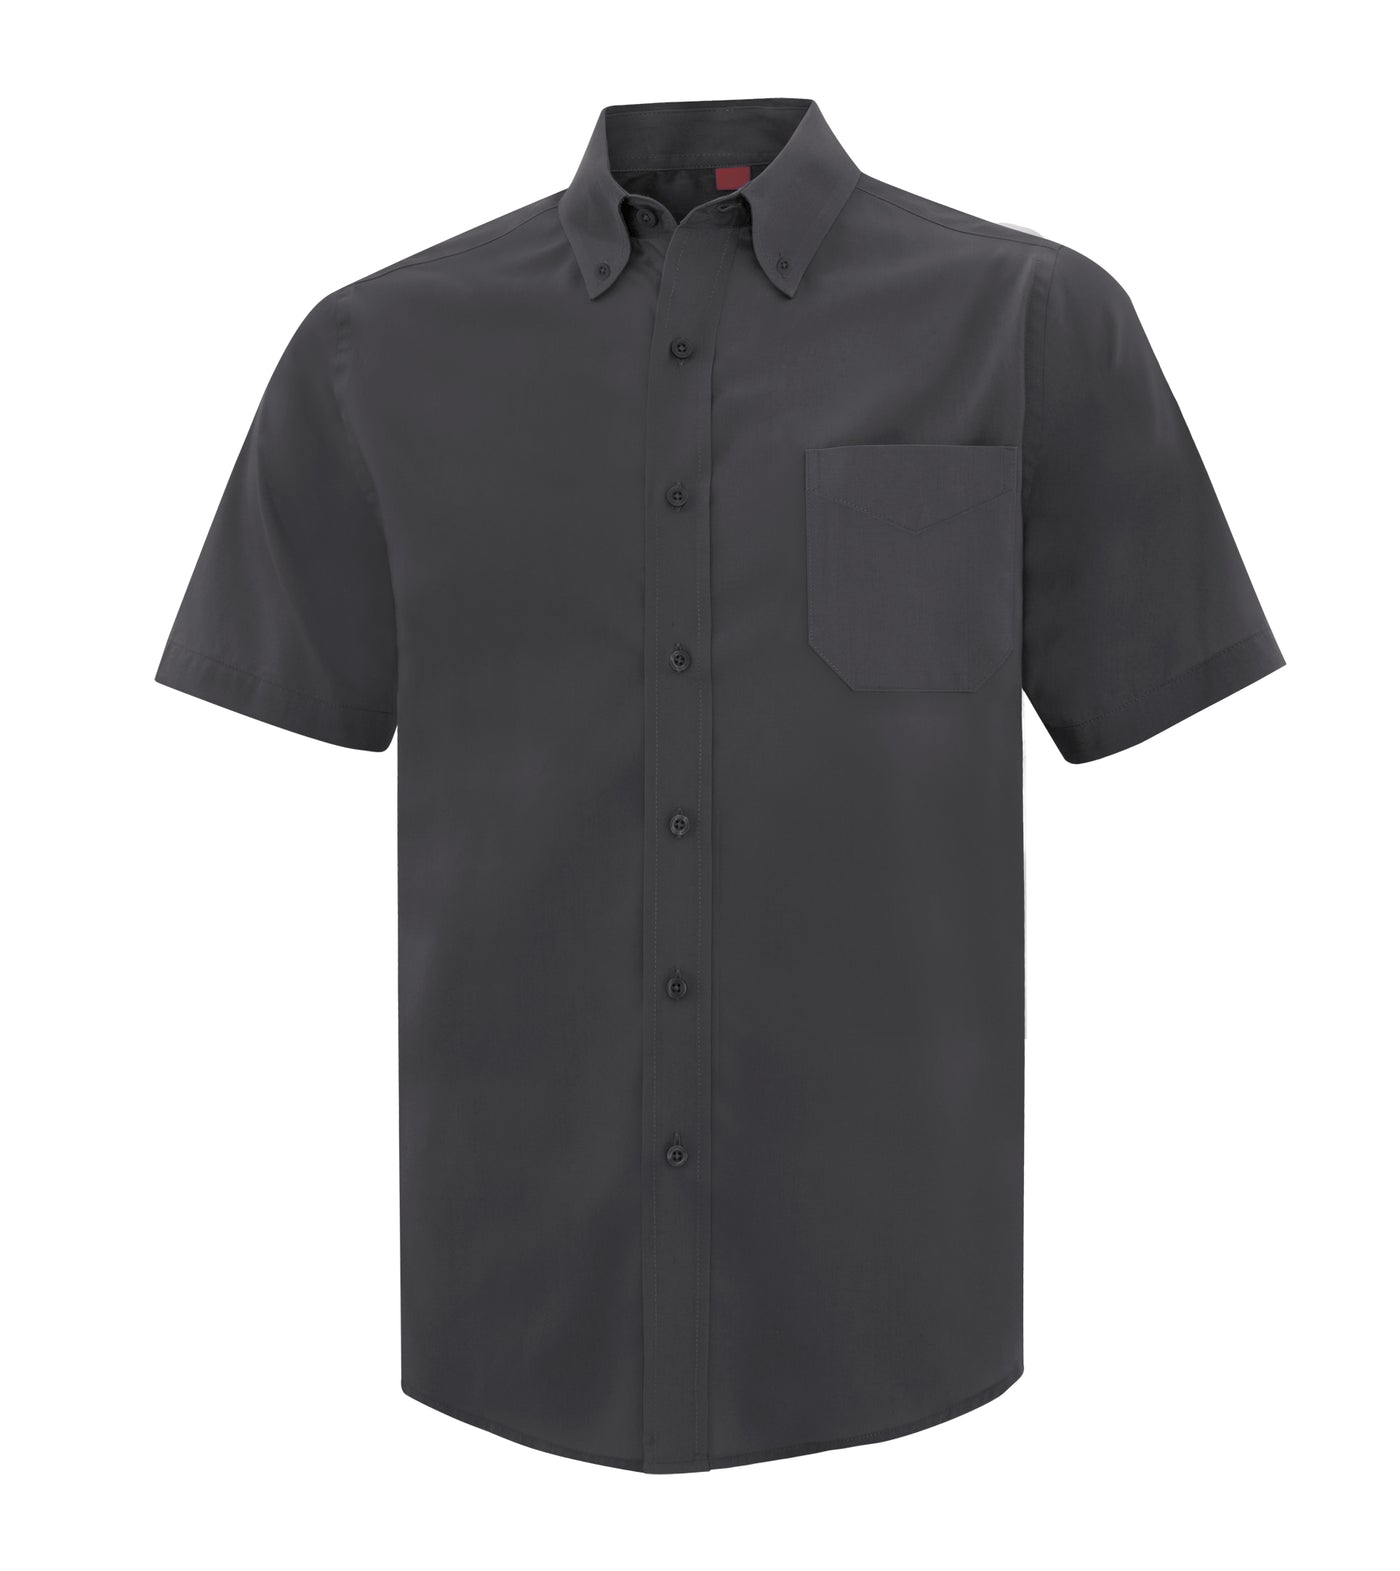 Iron Grey - Coal Harbour Men's Short Sleeve Work Shirt